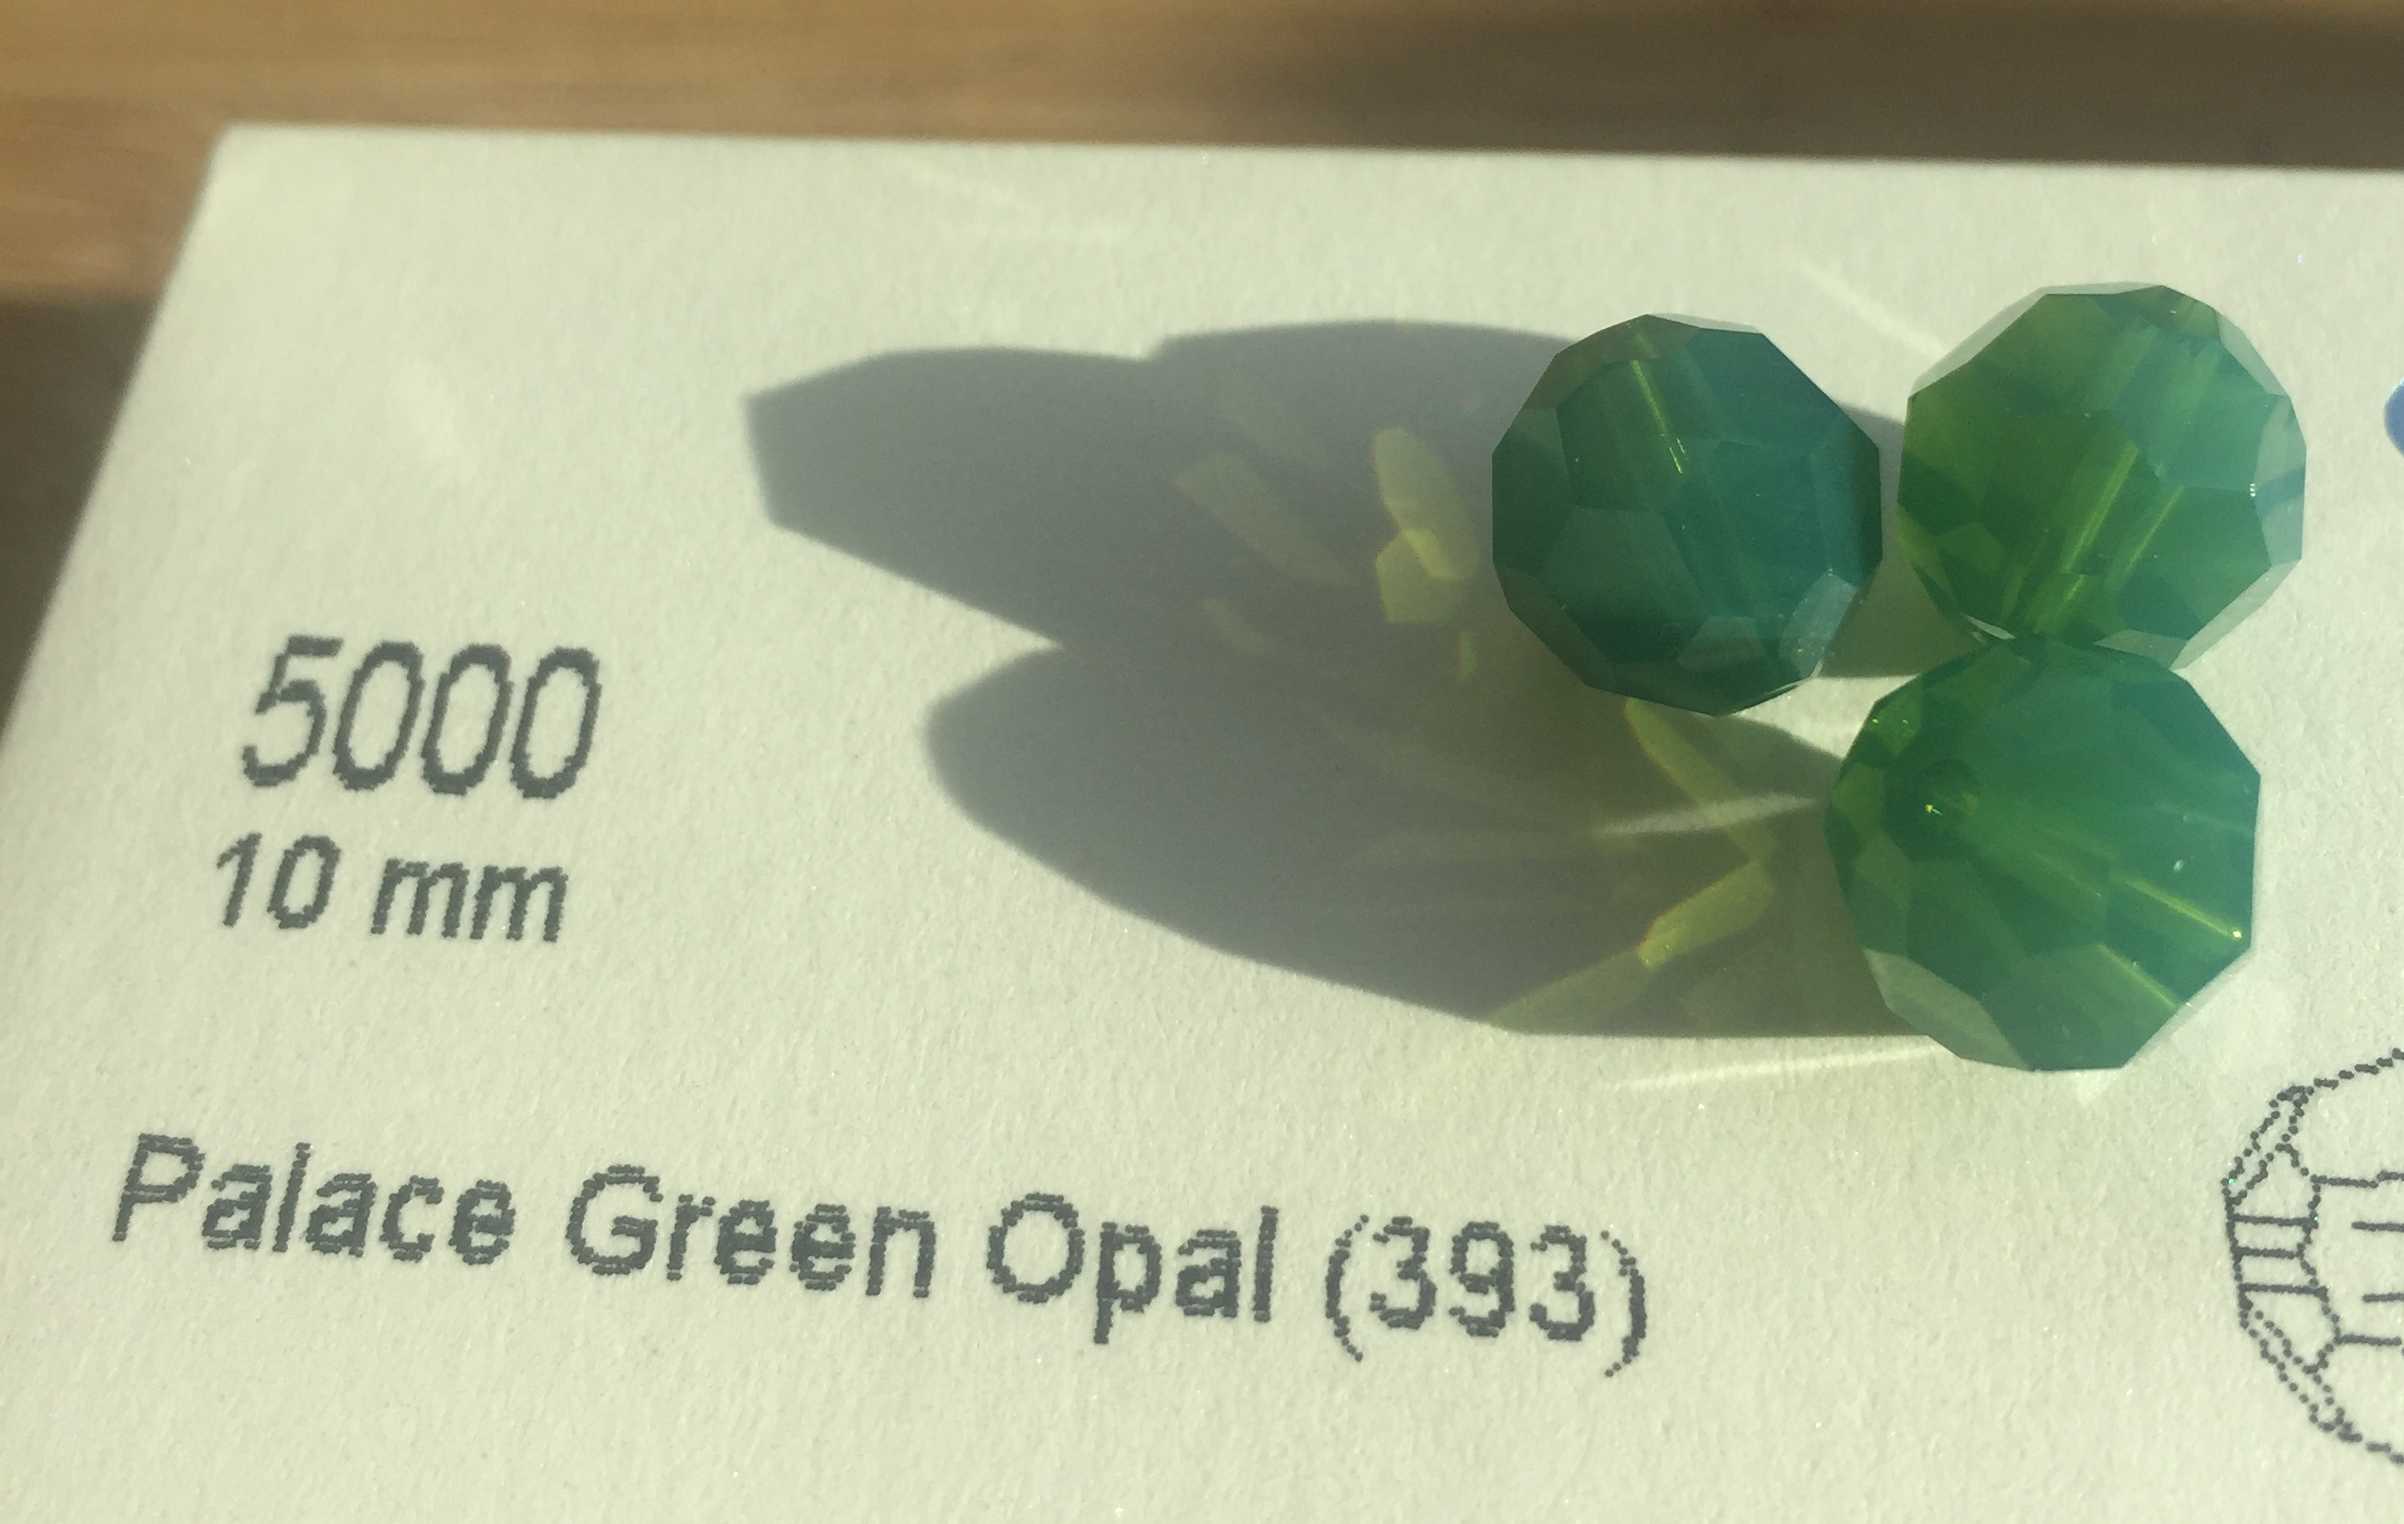 5000 - Palace Green Opal (393) - 10mm (L)